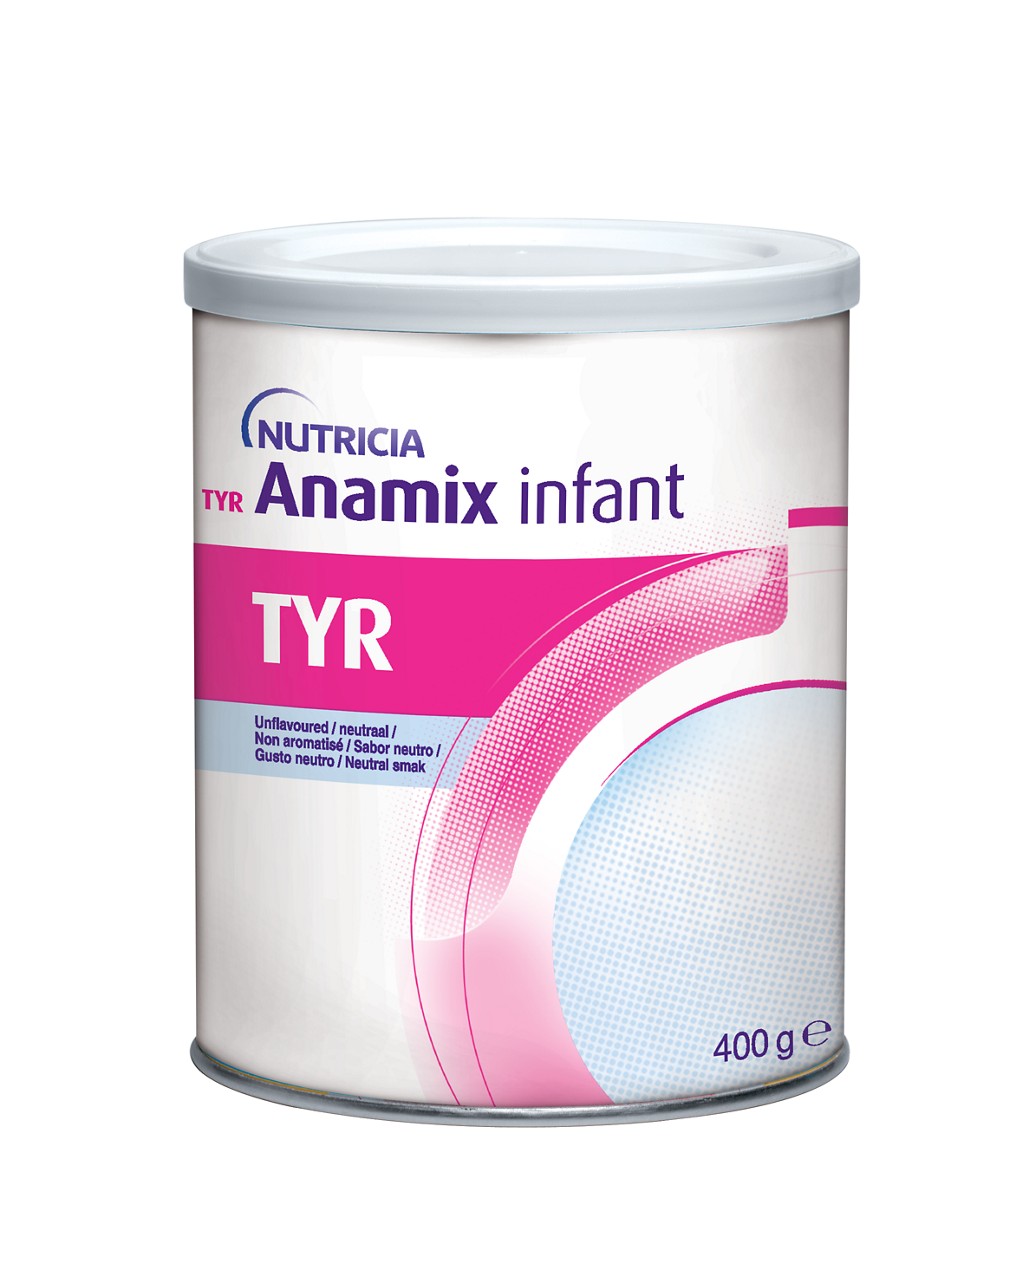 TYR Anamix Infant 400g Tin